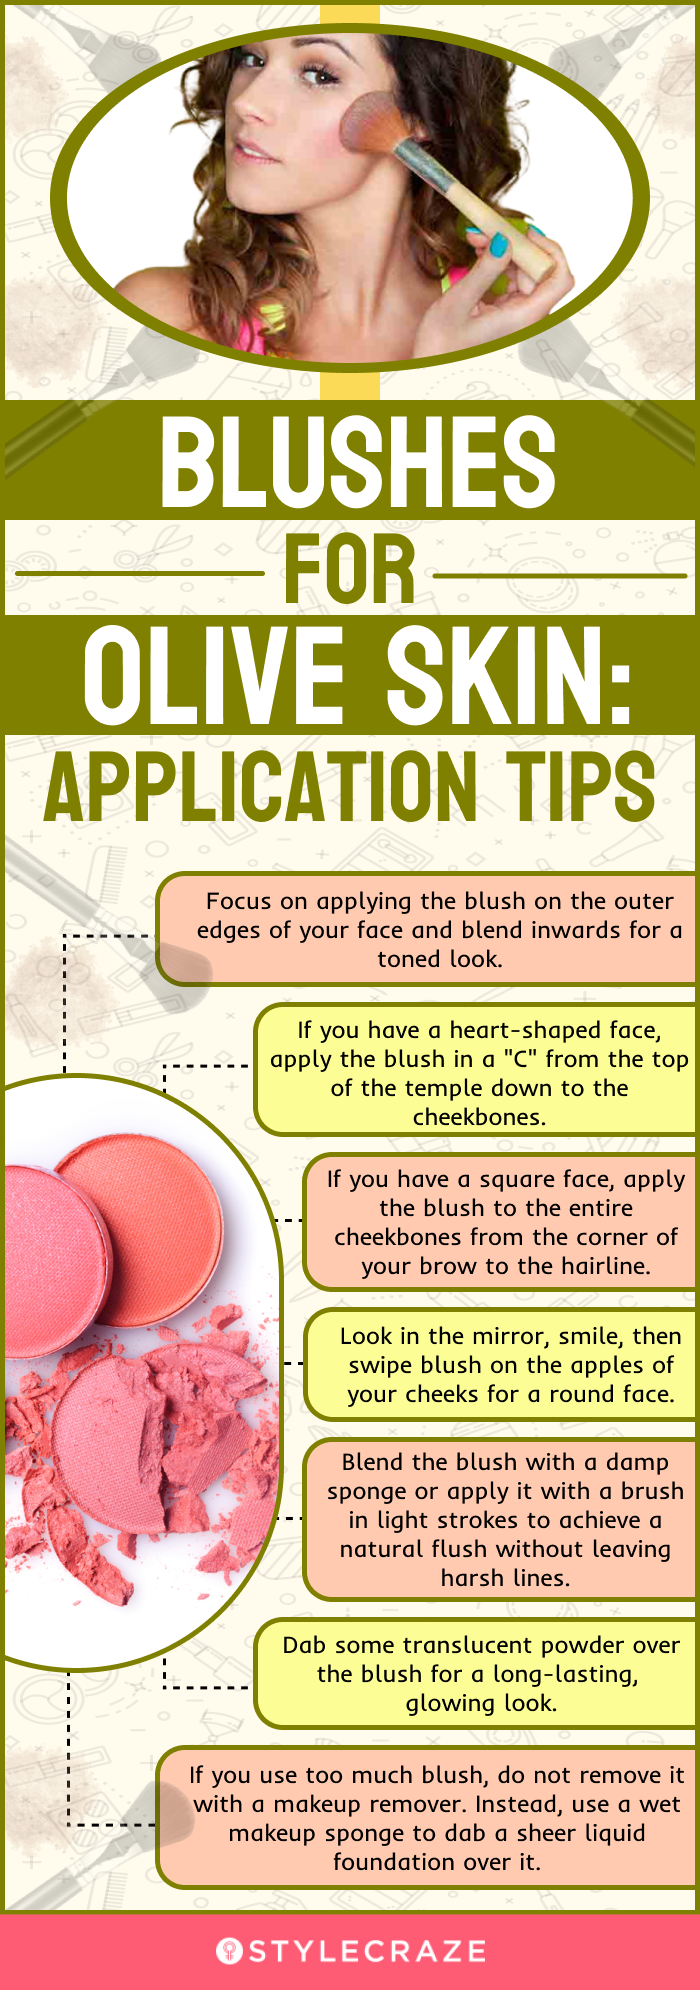 Blushes For Olive Skin: Application Tips